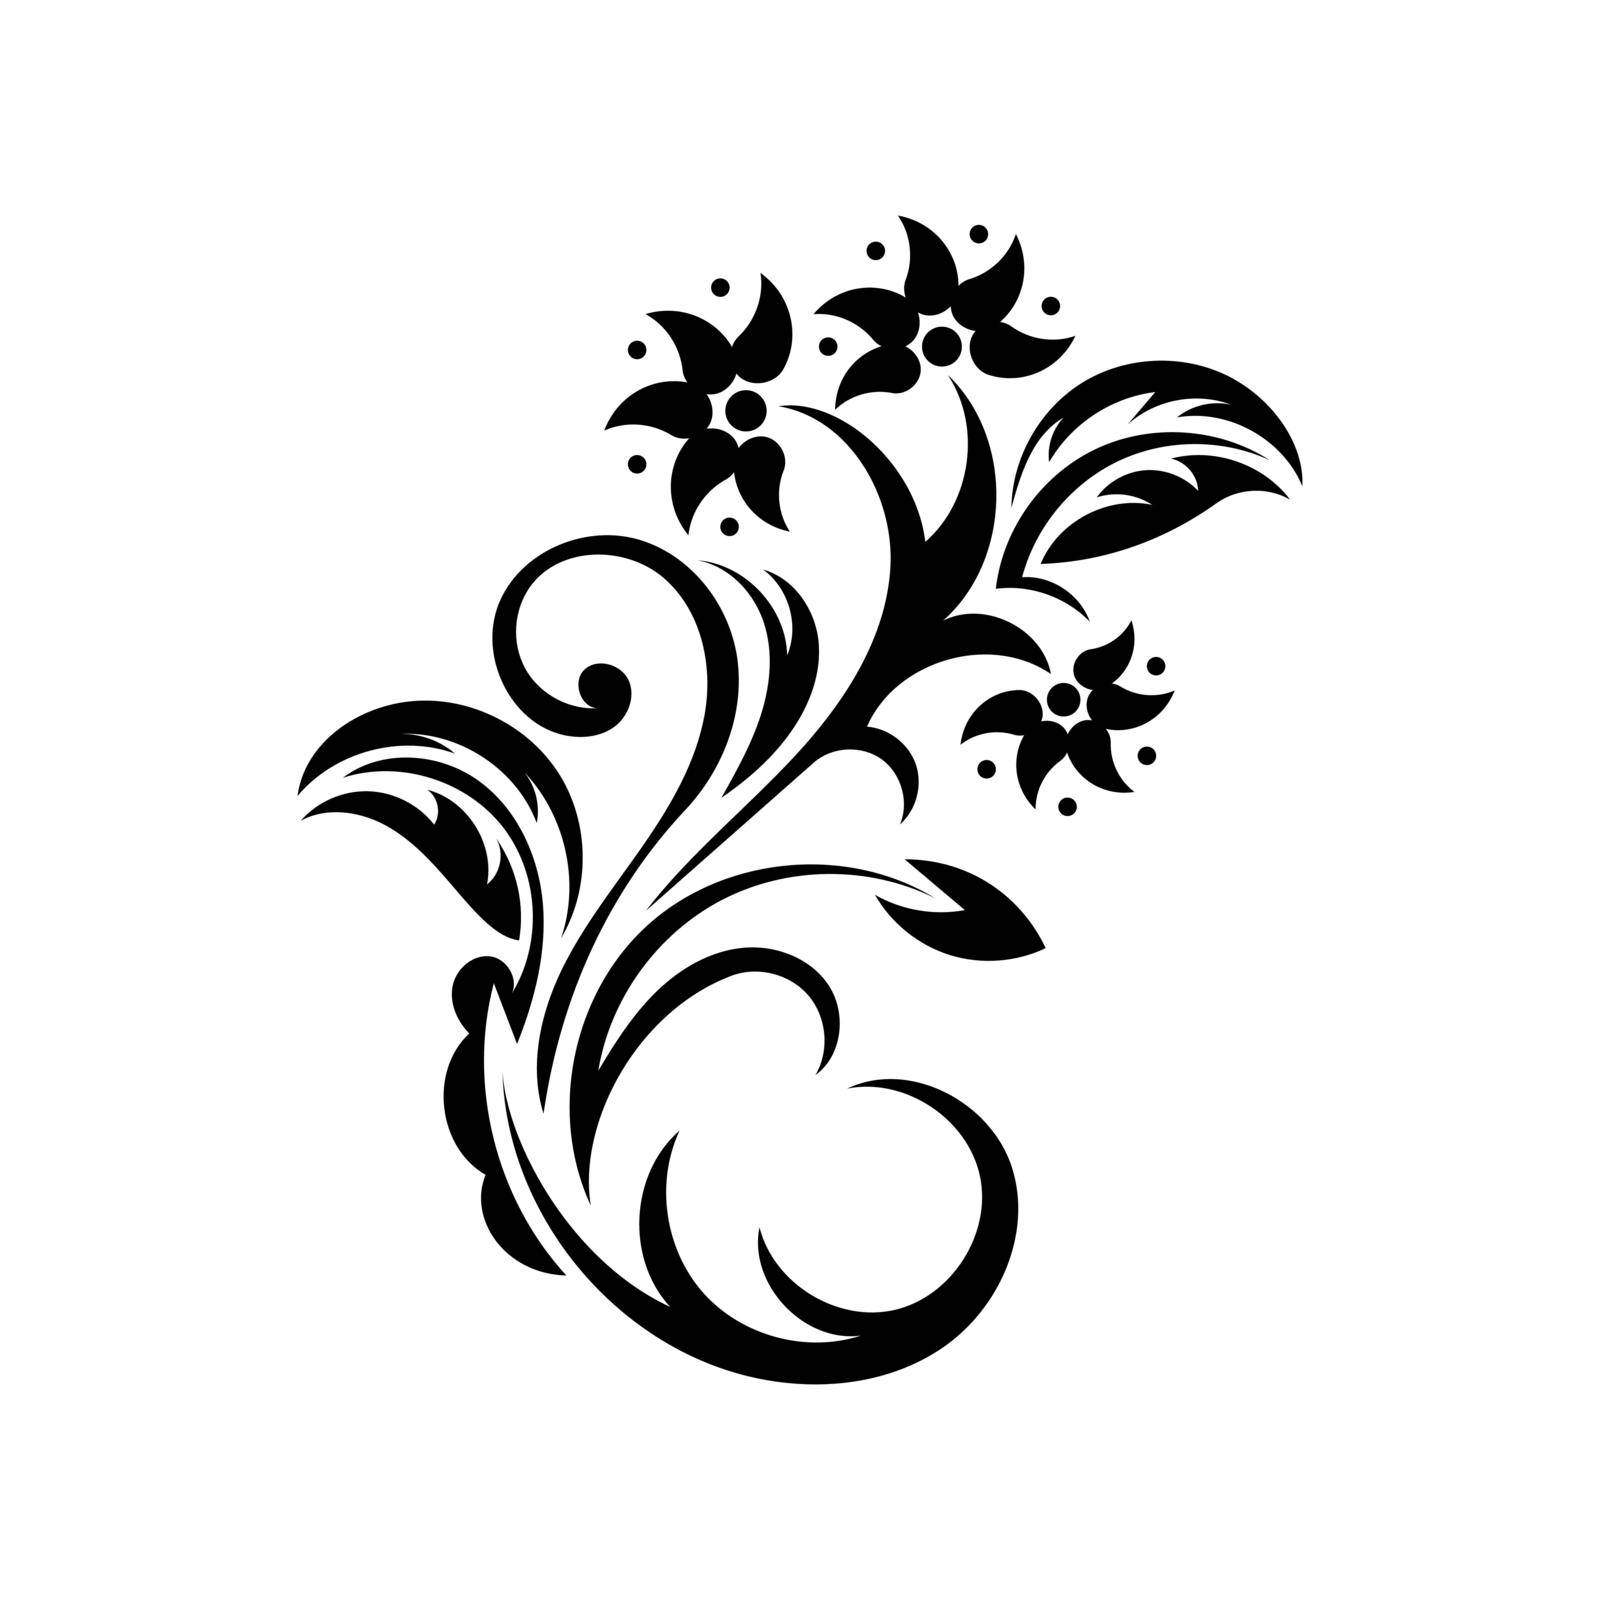 Flower motif, Rose design sketch for pattern,lace edge by Javvani